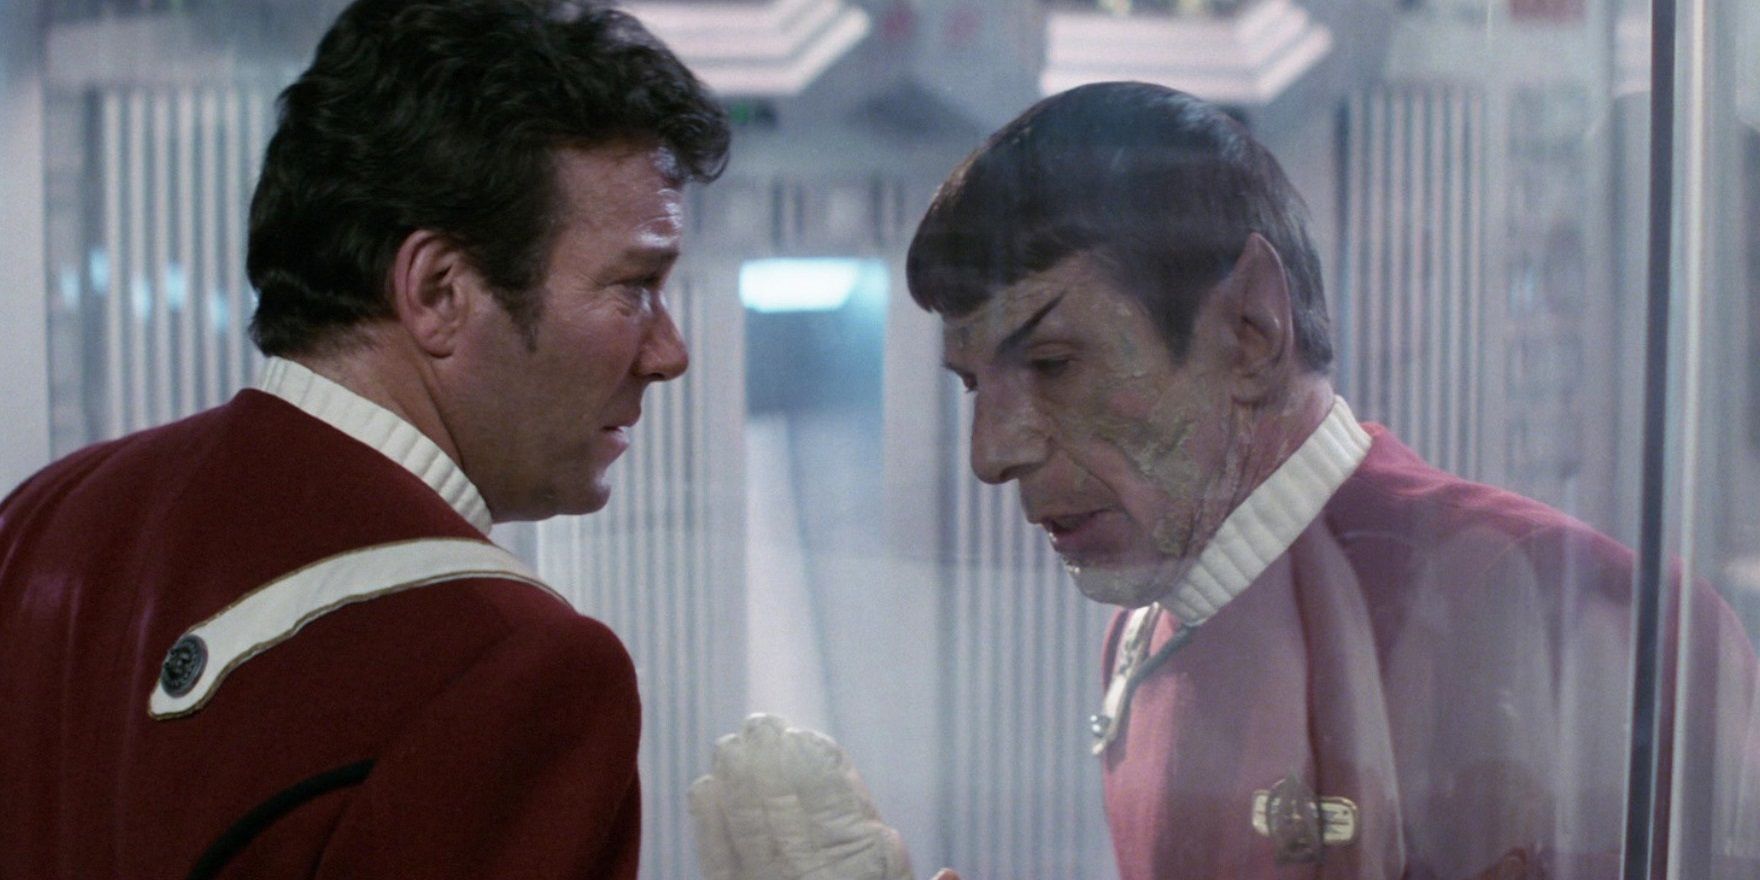 Kirk says goodbye to Spock in Star Trek II The Wrath of Khan